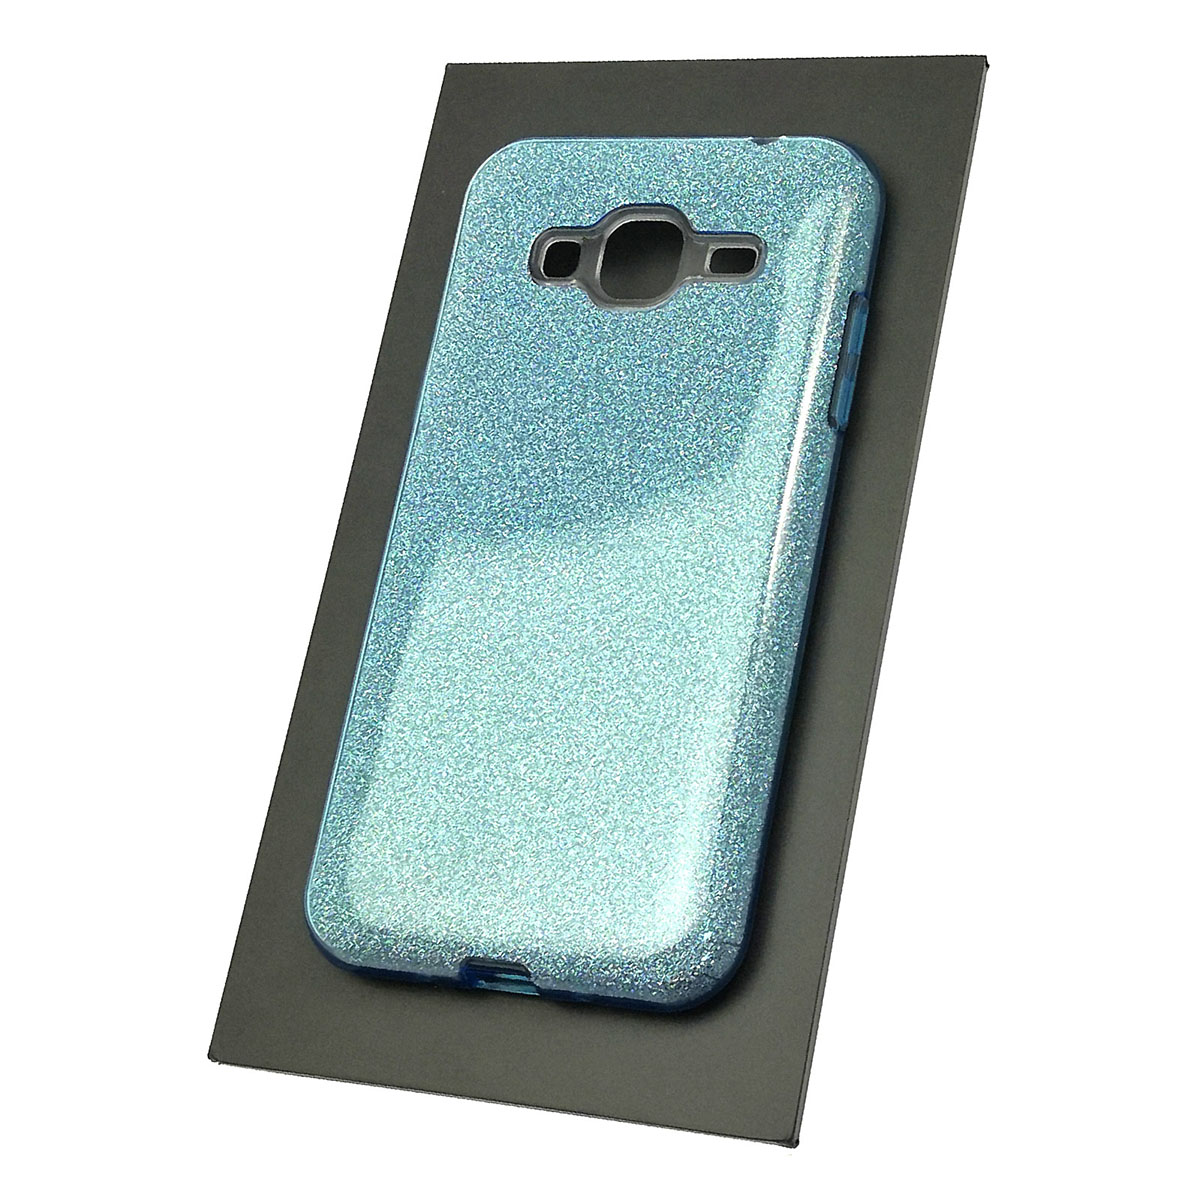 Чехол накладка Shine для SAMSUNG Galaxy J3 2016 (SM-J310), силикон, блестки, цвет голубой